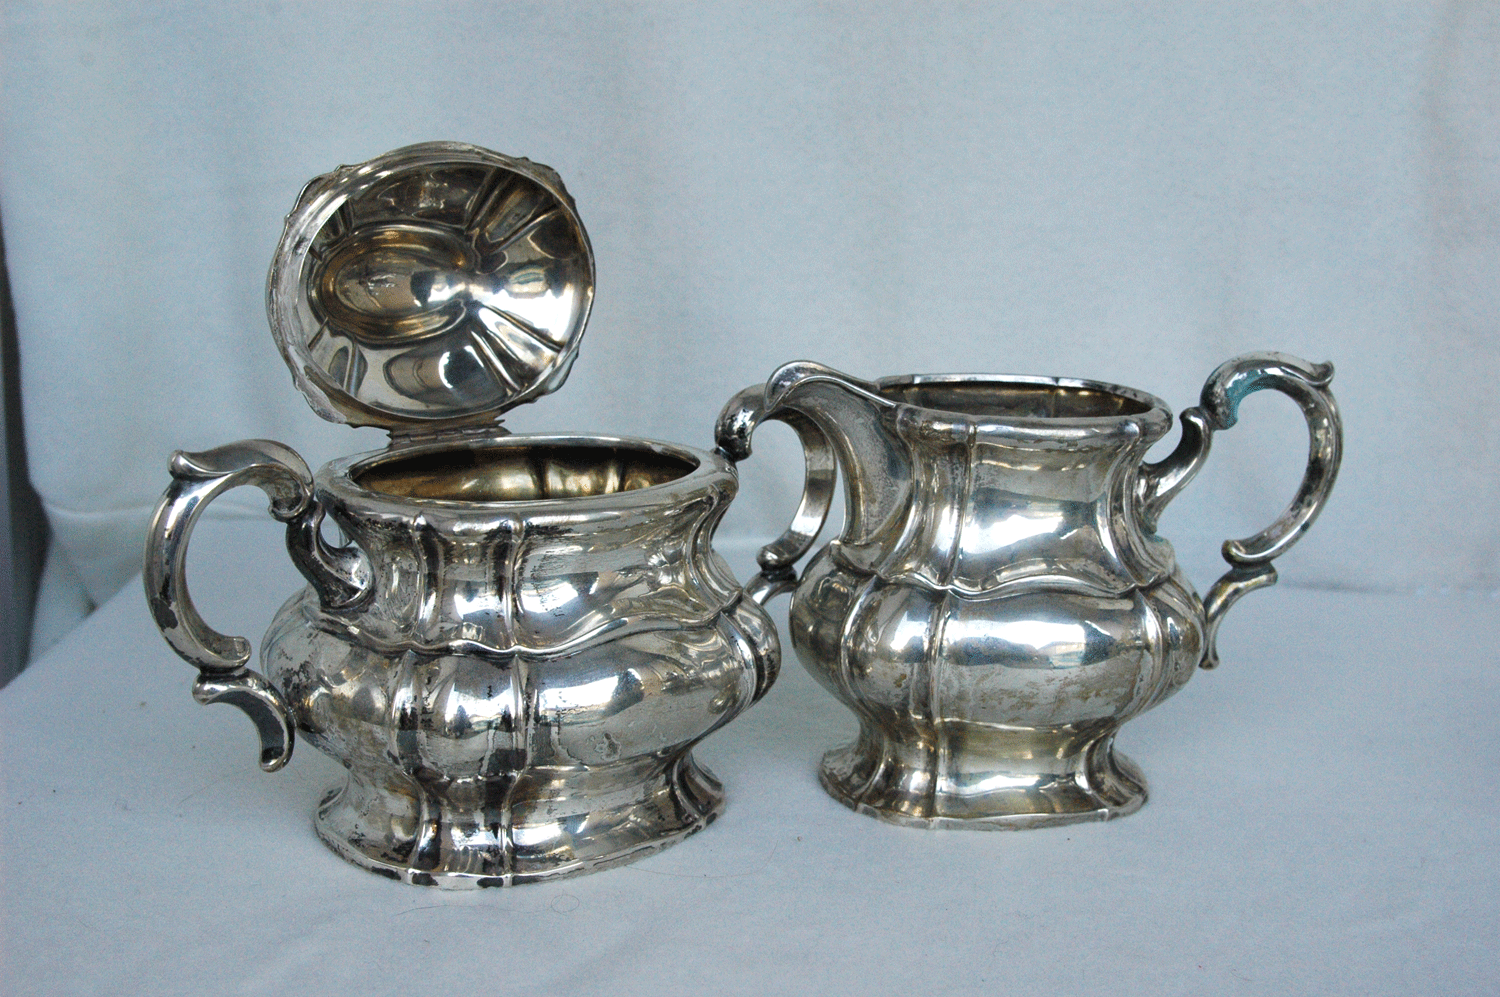 Kaffeekanne, Teekanne, Rahmservice, 835/- Silber, 1670 g - Bild 4 aus 7